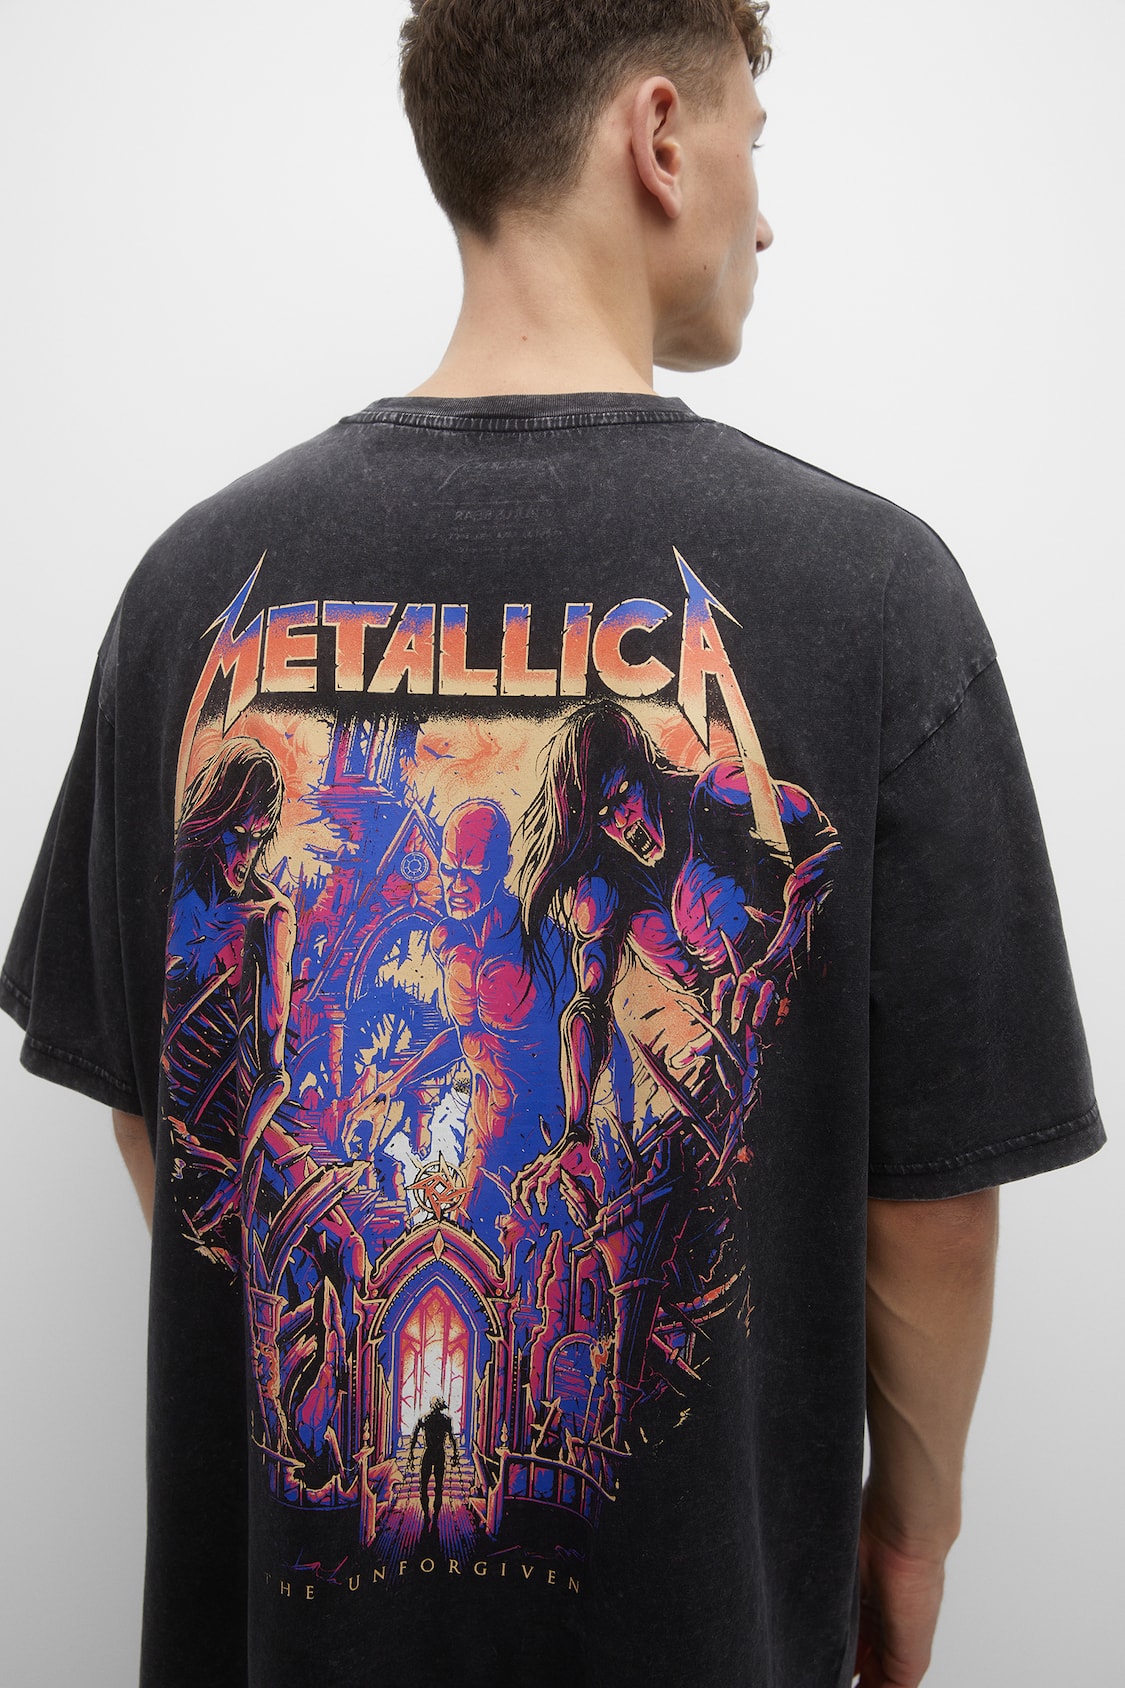 versus Típicamente Joseph Banks Faded Metallica T-shirt - pull&bear